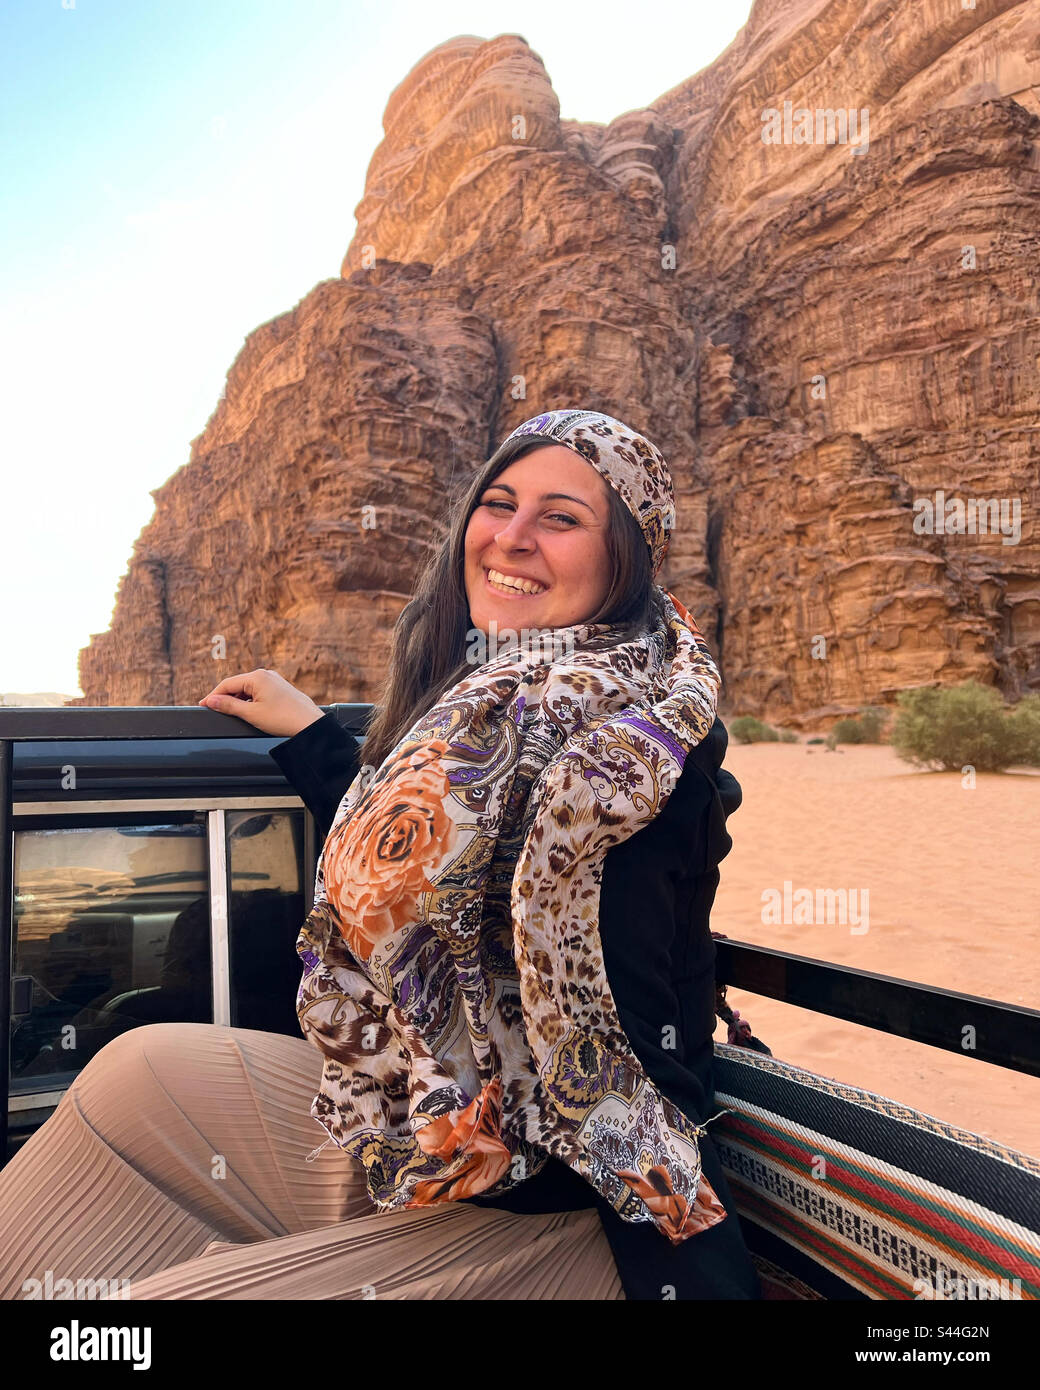 In the middle of the desert in Jordan Stock Photo